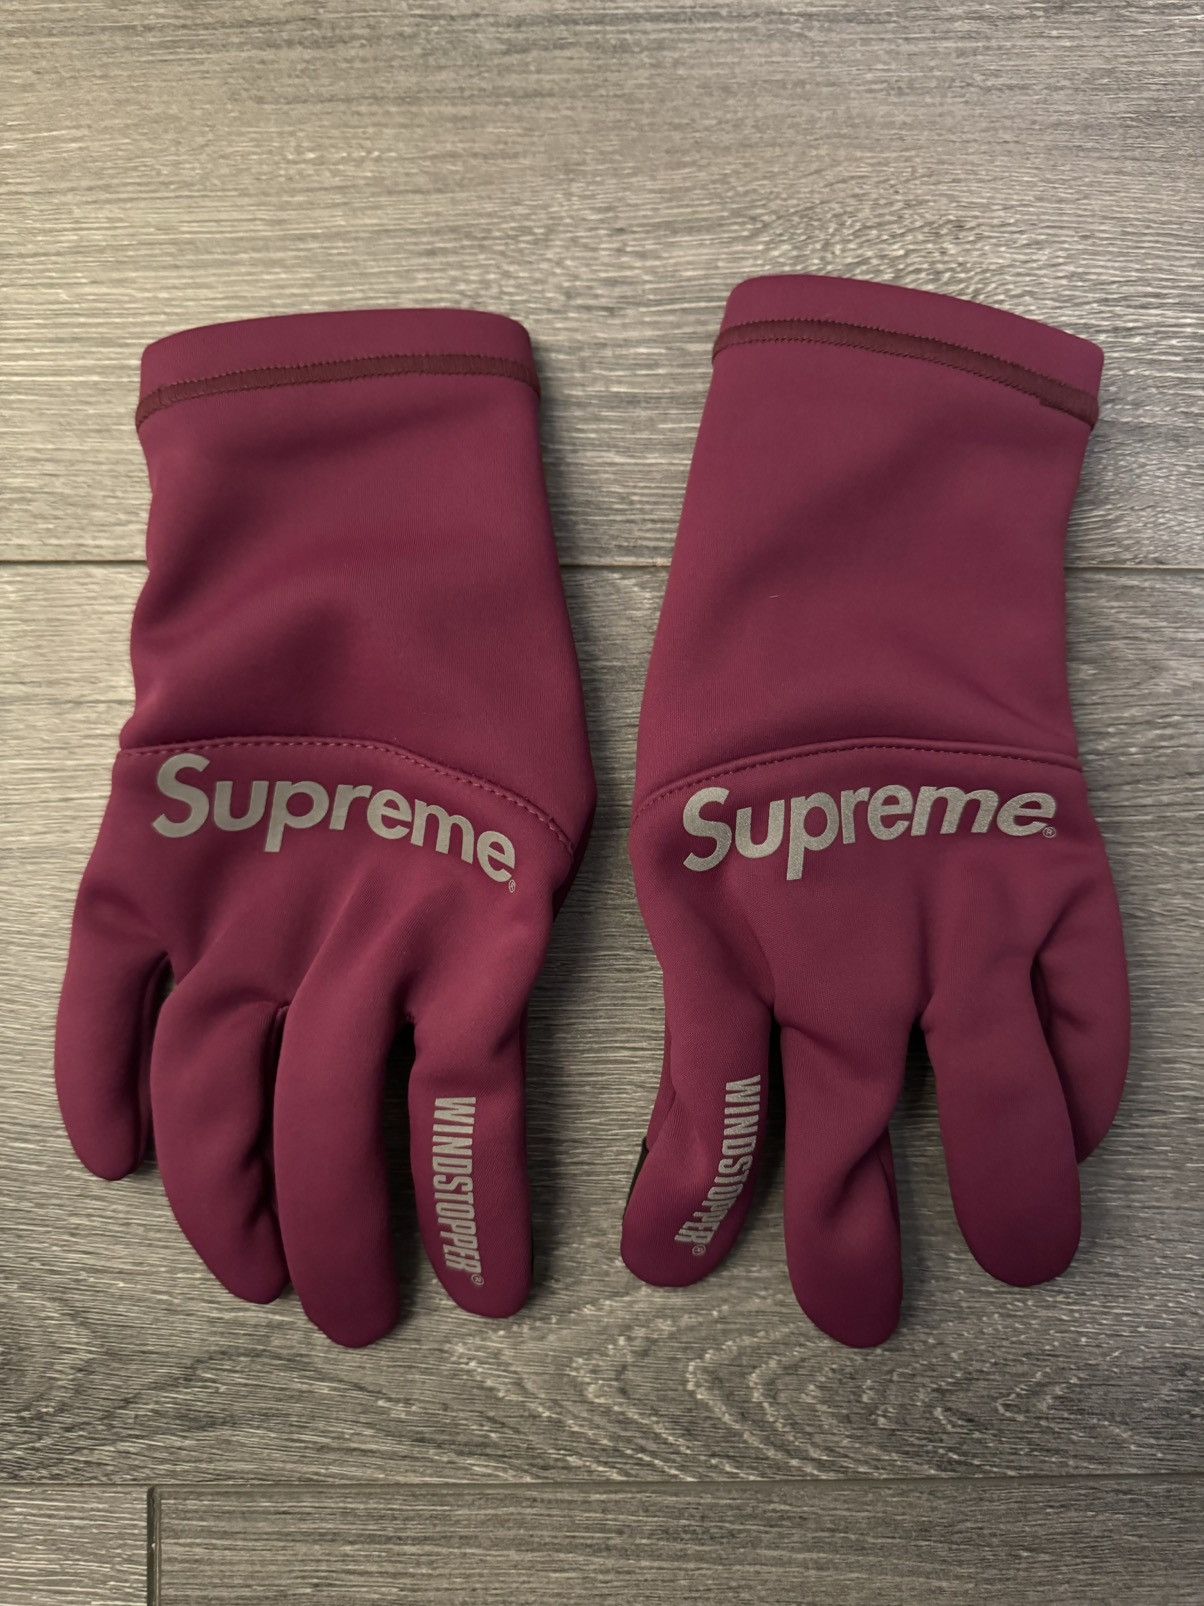 Supreme Supreme WindStopper Gloves | Grailed